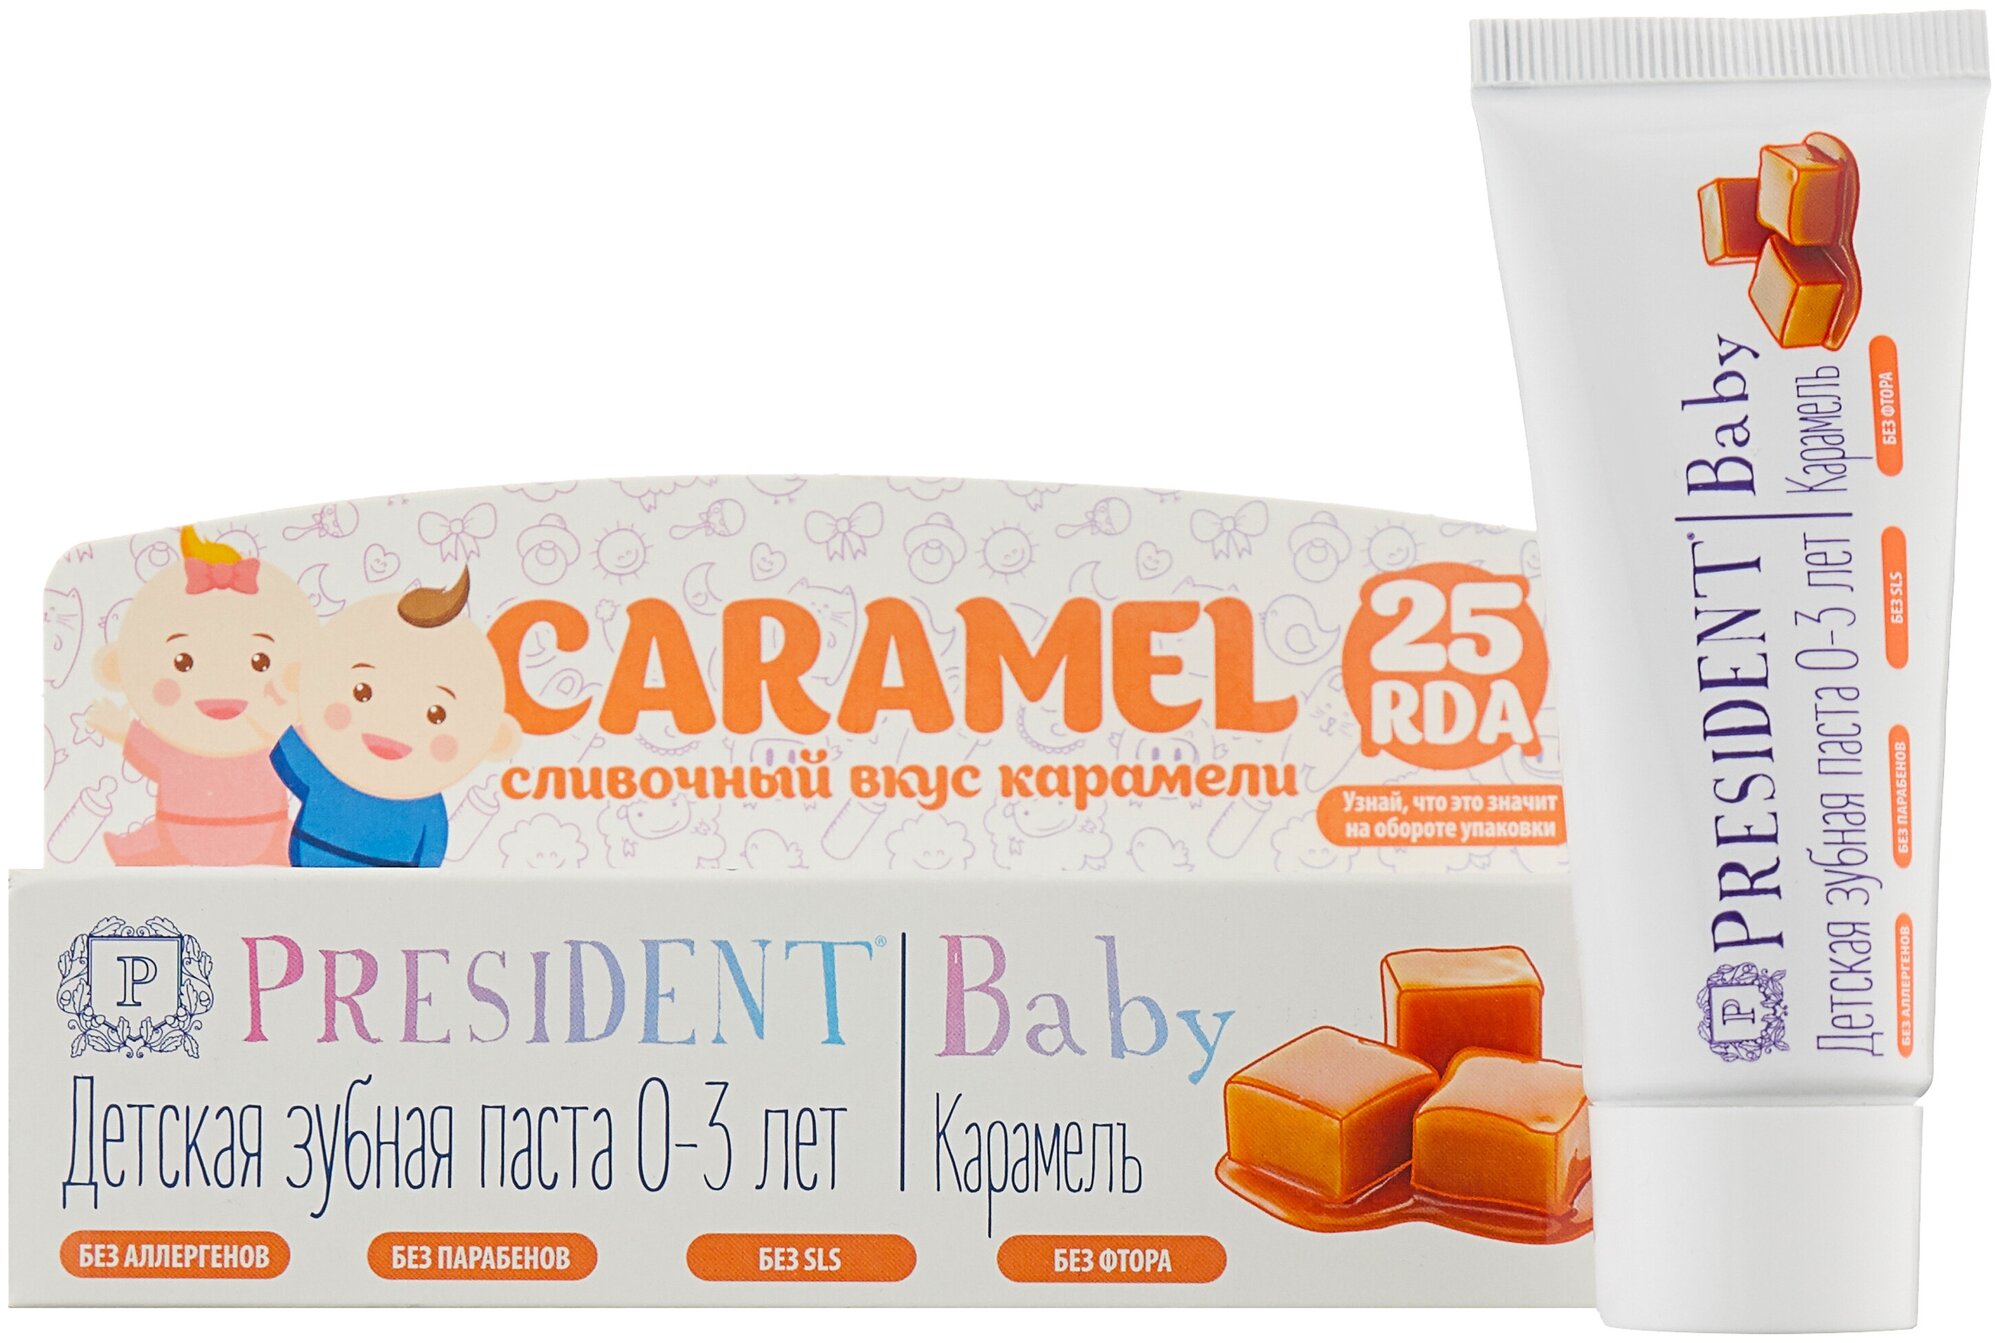 PresiDENT Baby зубная паста детская 0-3 карамель детская зубная паста 25 RDA без фтора 30 мл